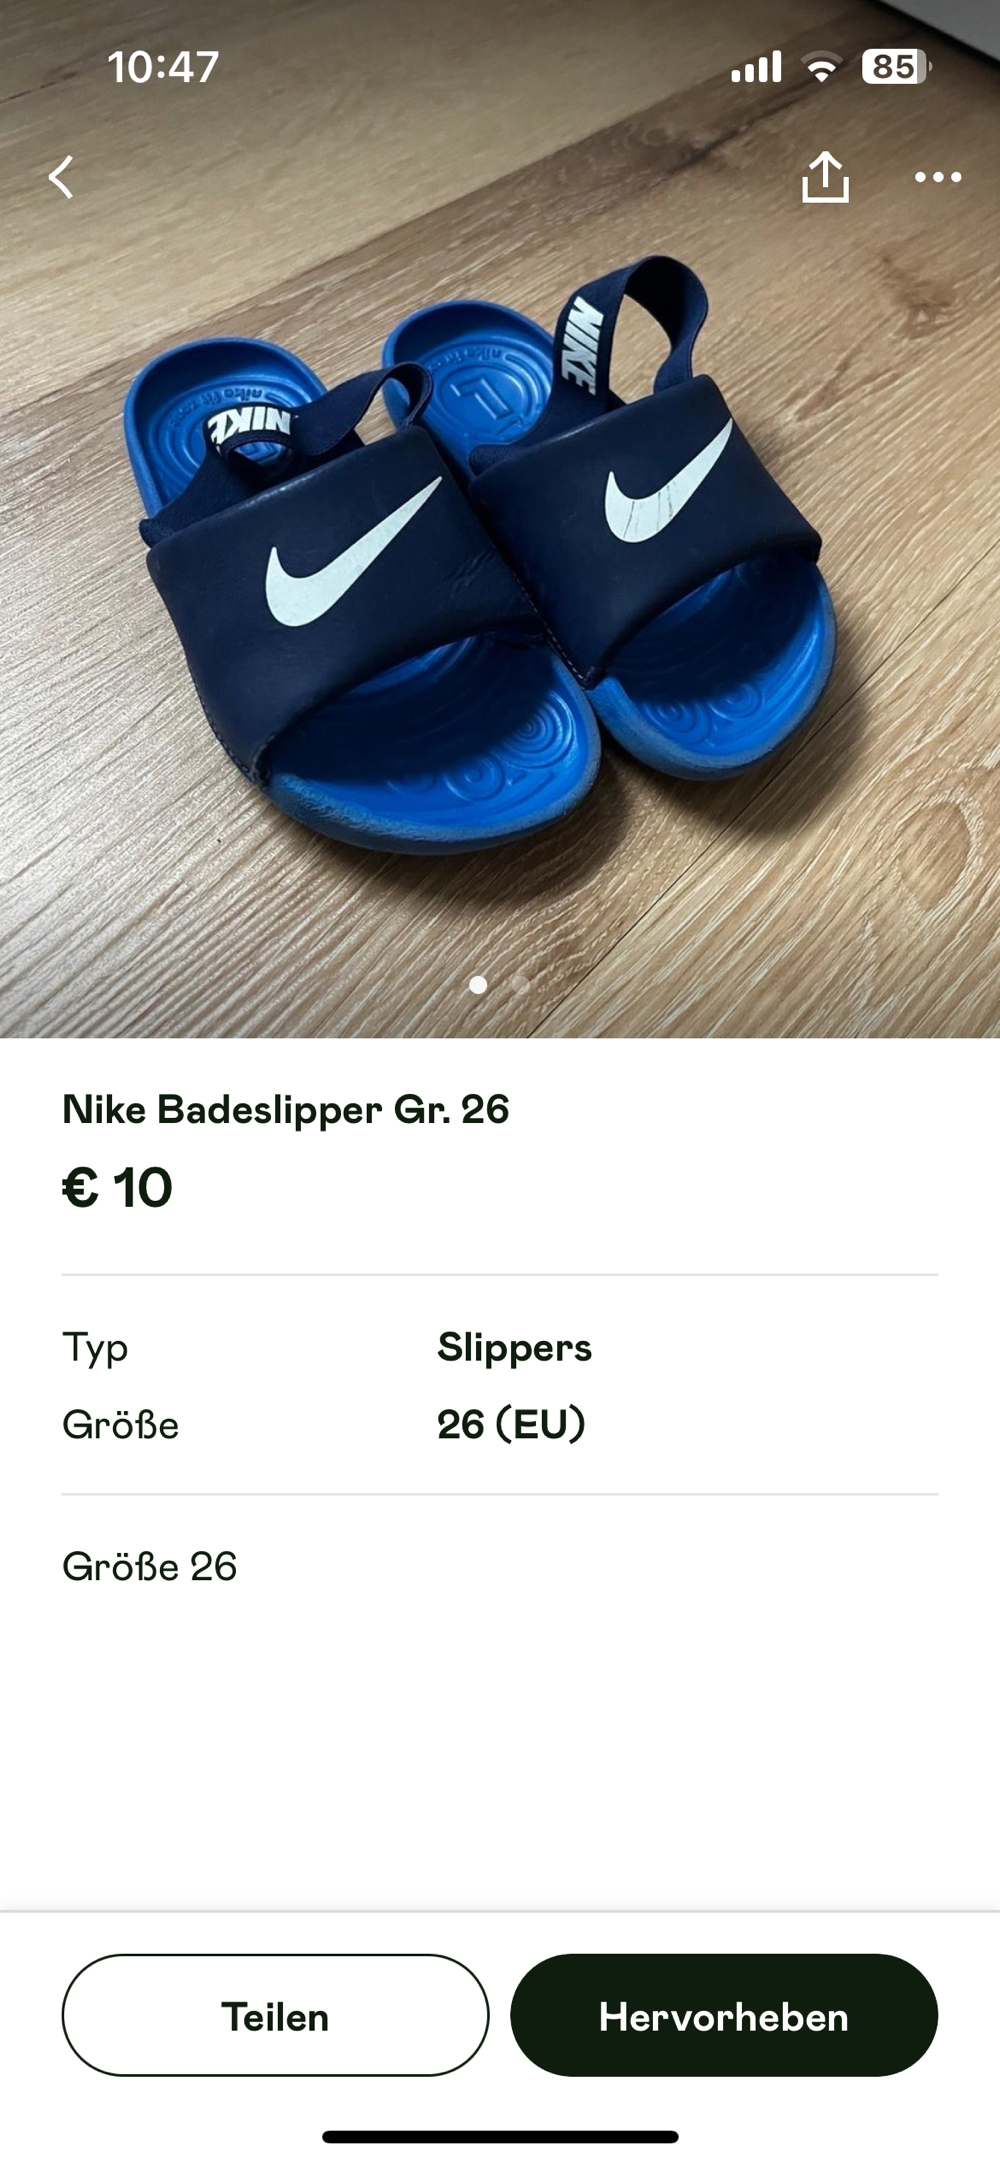 Nike Badeslipper Gr. 26